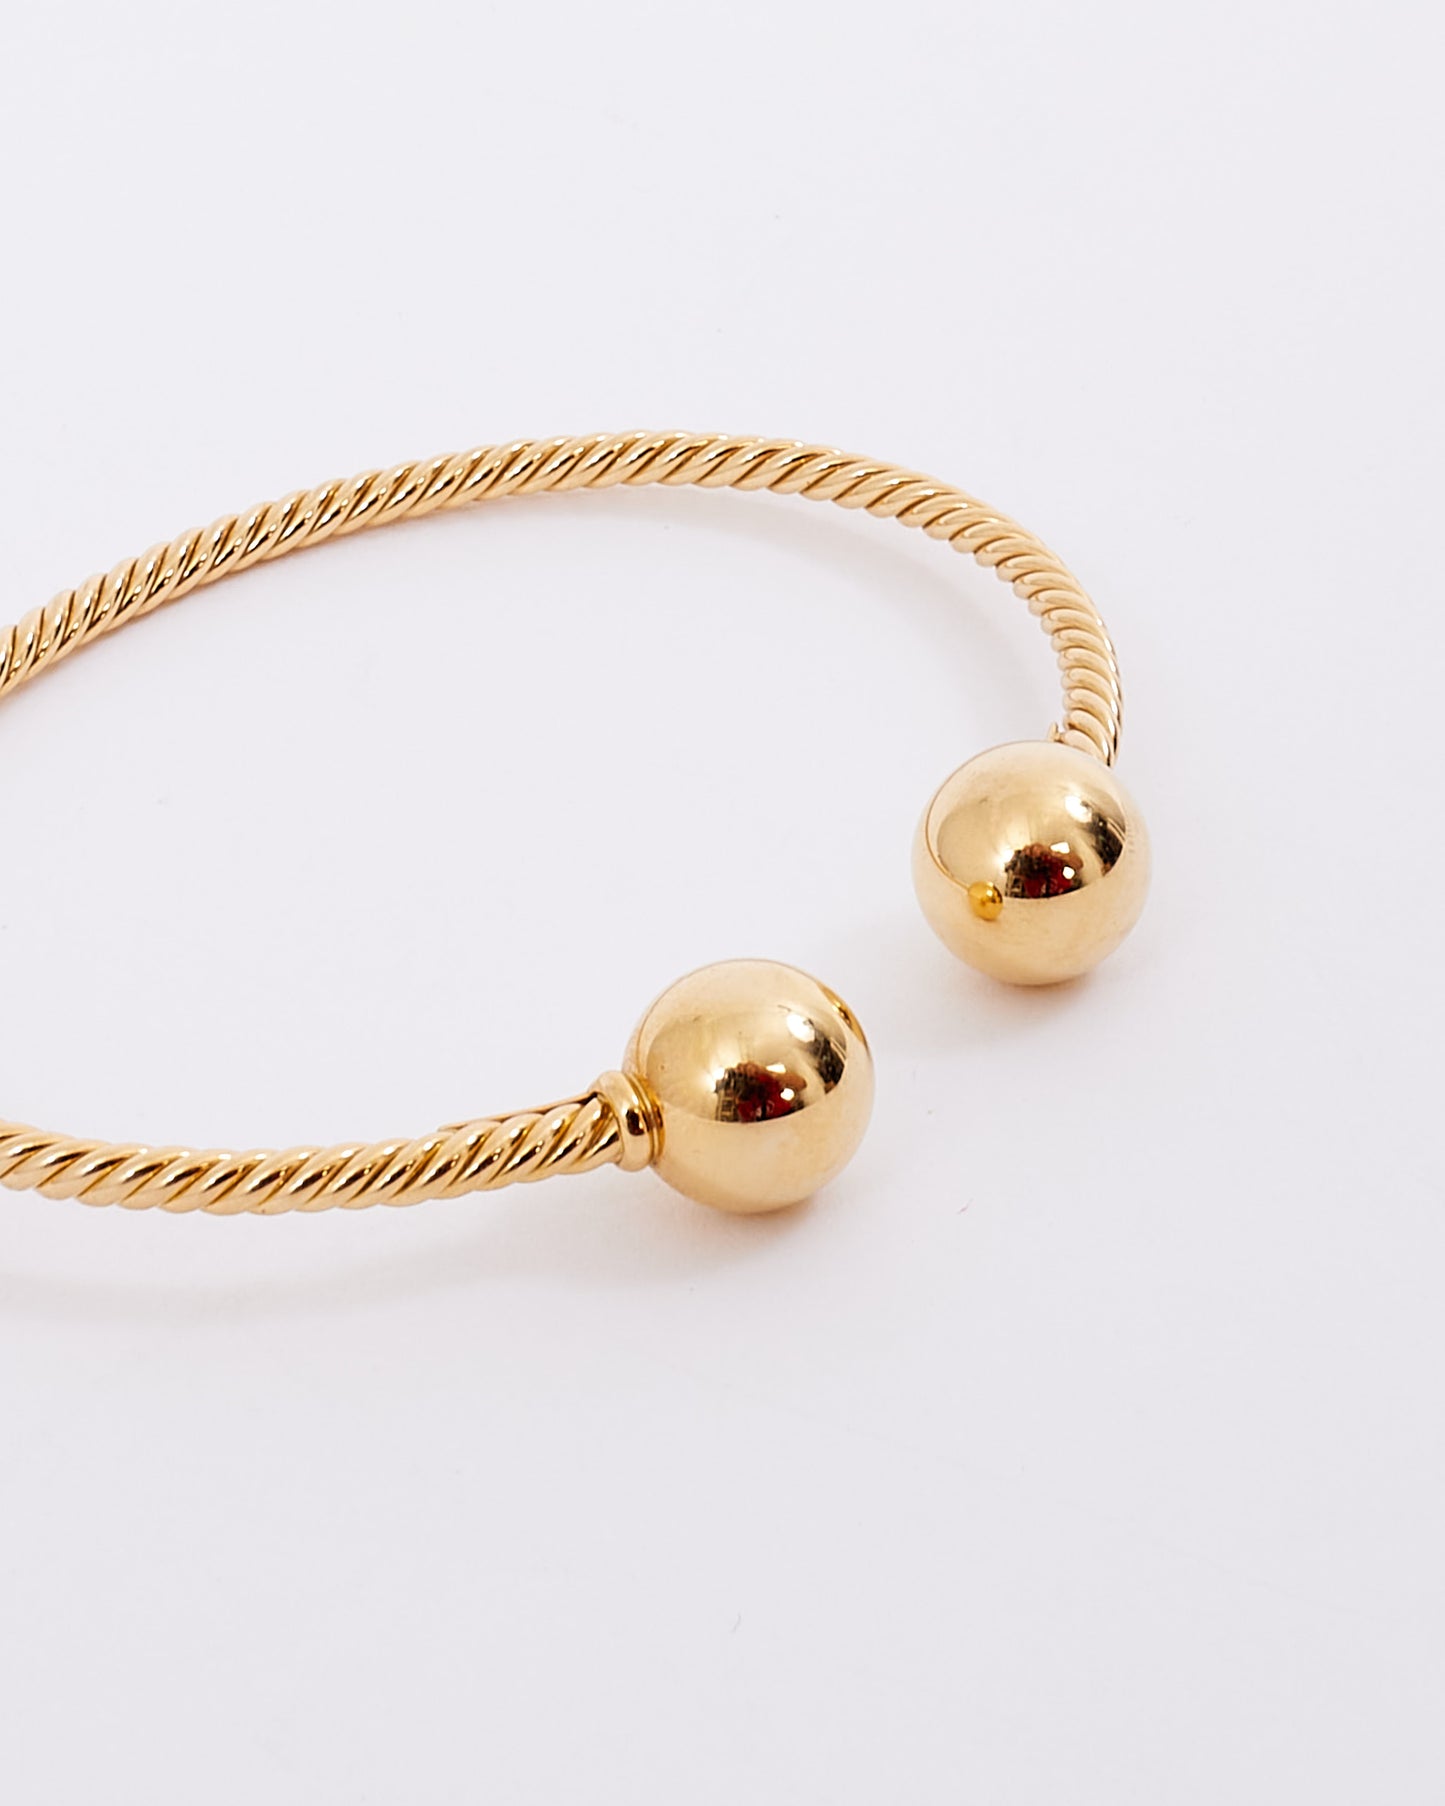 David Yurman 18K Gold Bead Dome Cuff Solari Bracelet - M